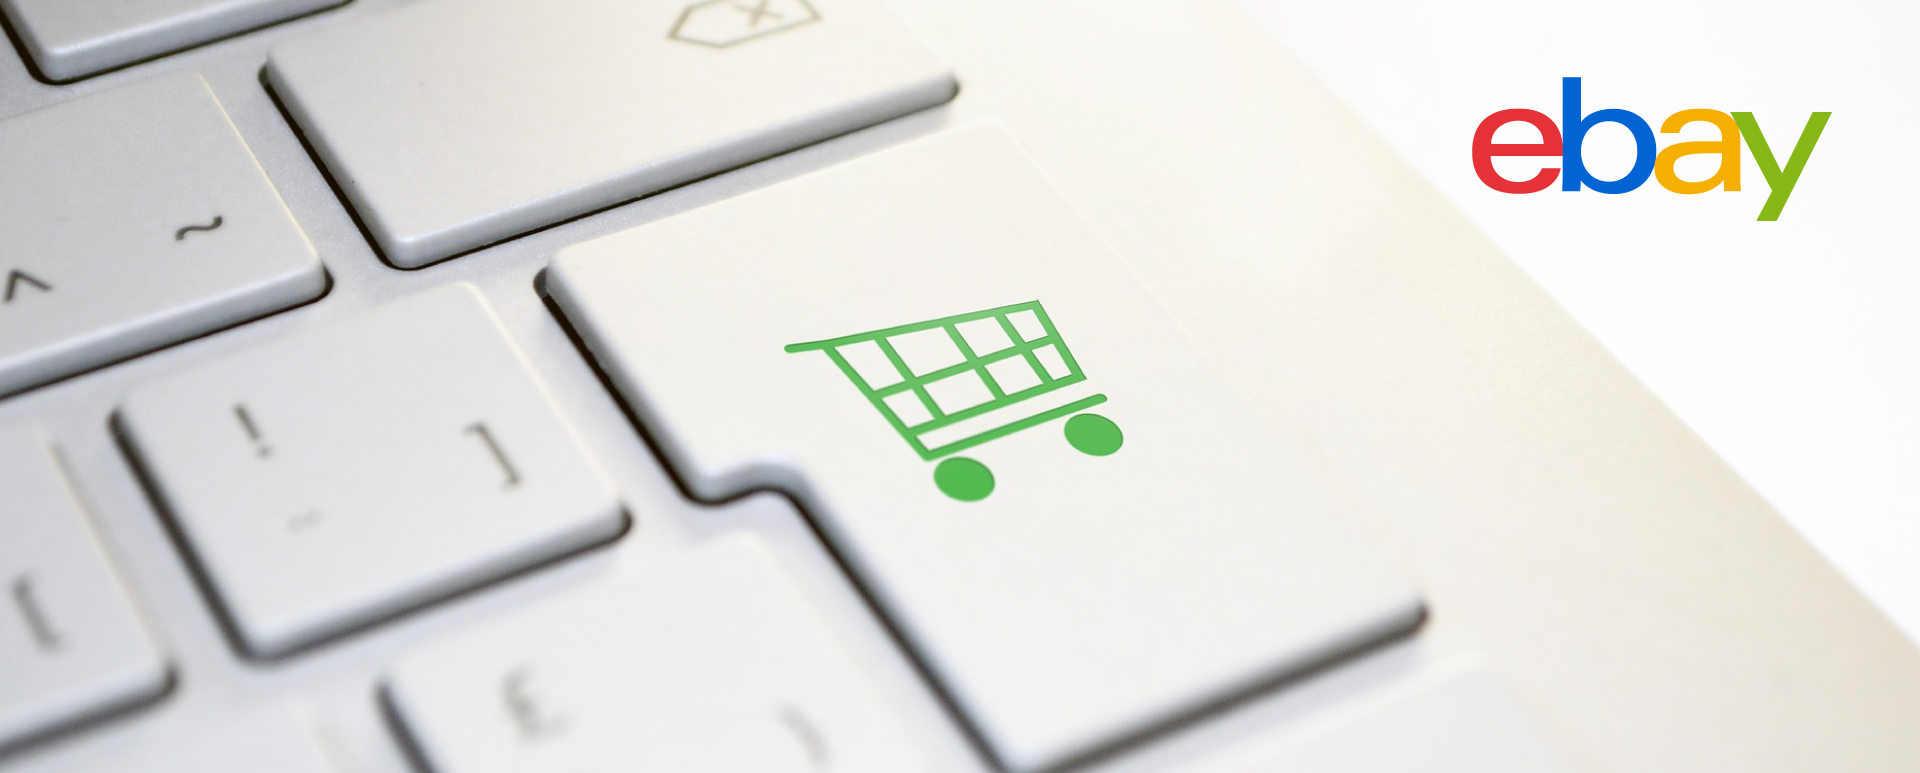 eBay shopping cart icon on a keyboard.